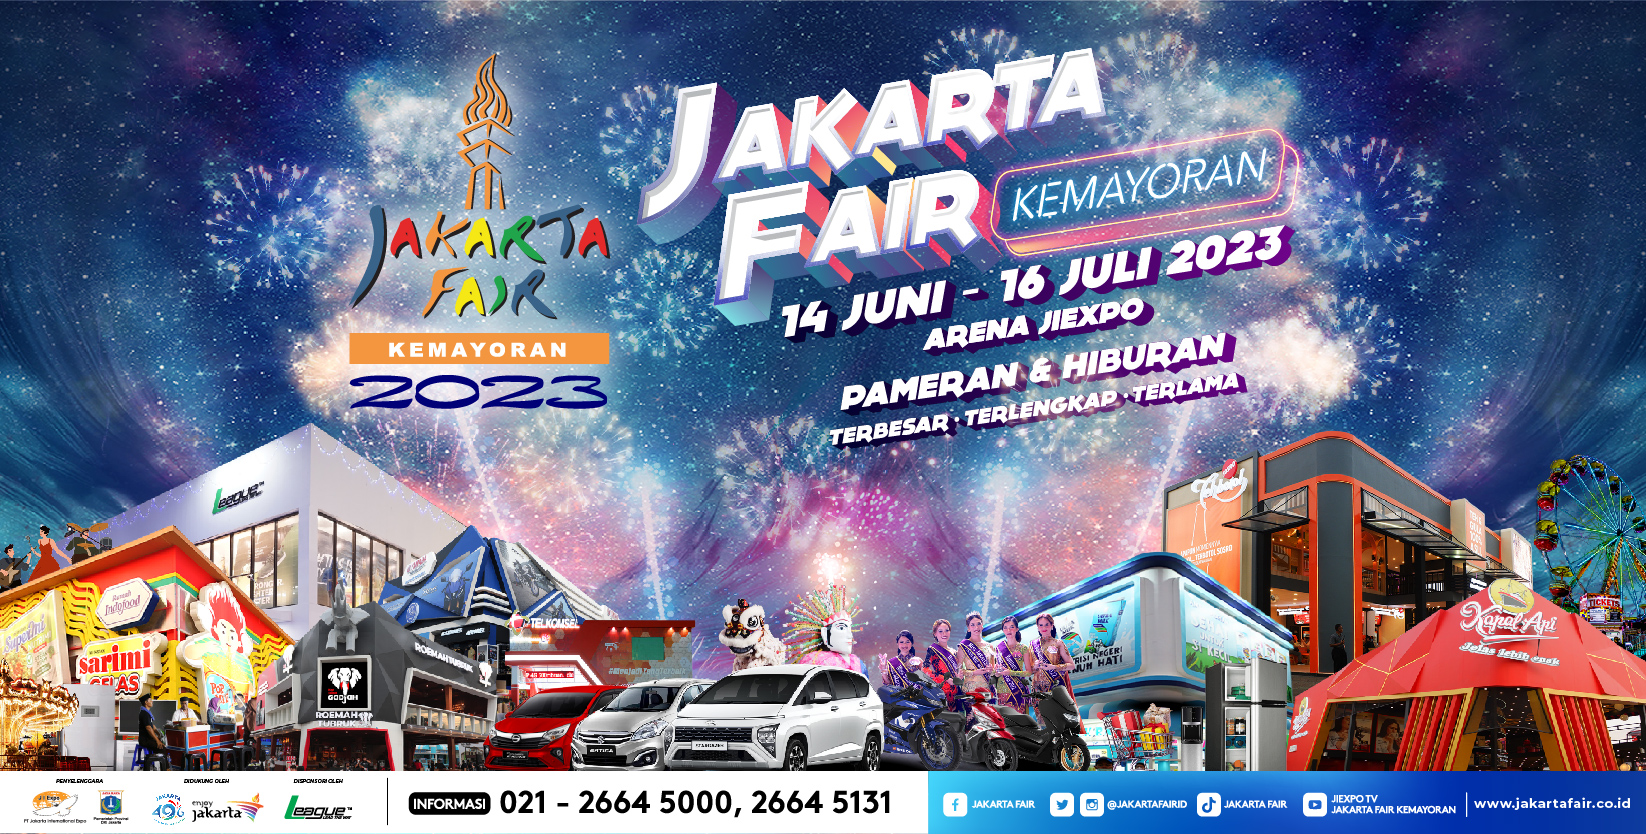 JAKARTA FAIR KEMAYORAN 2023 JAKARTA INTERNATIONAL EXPO